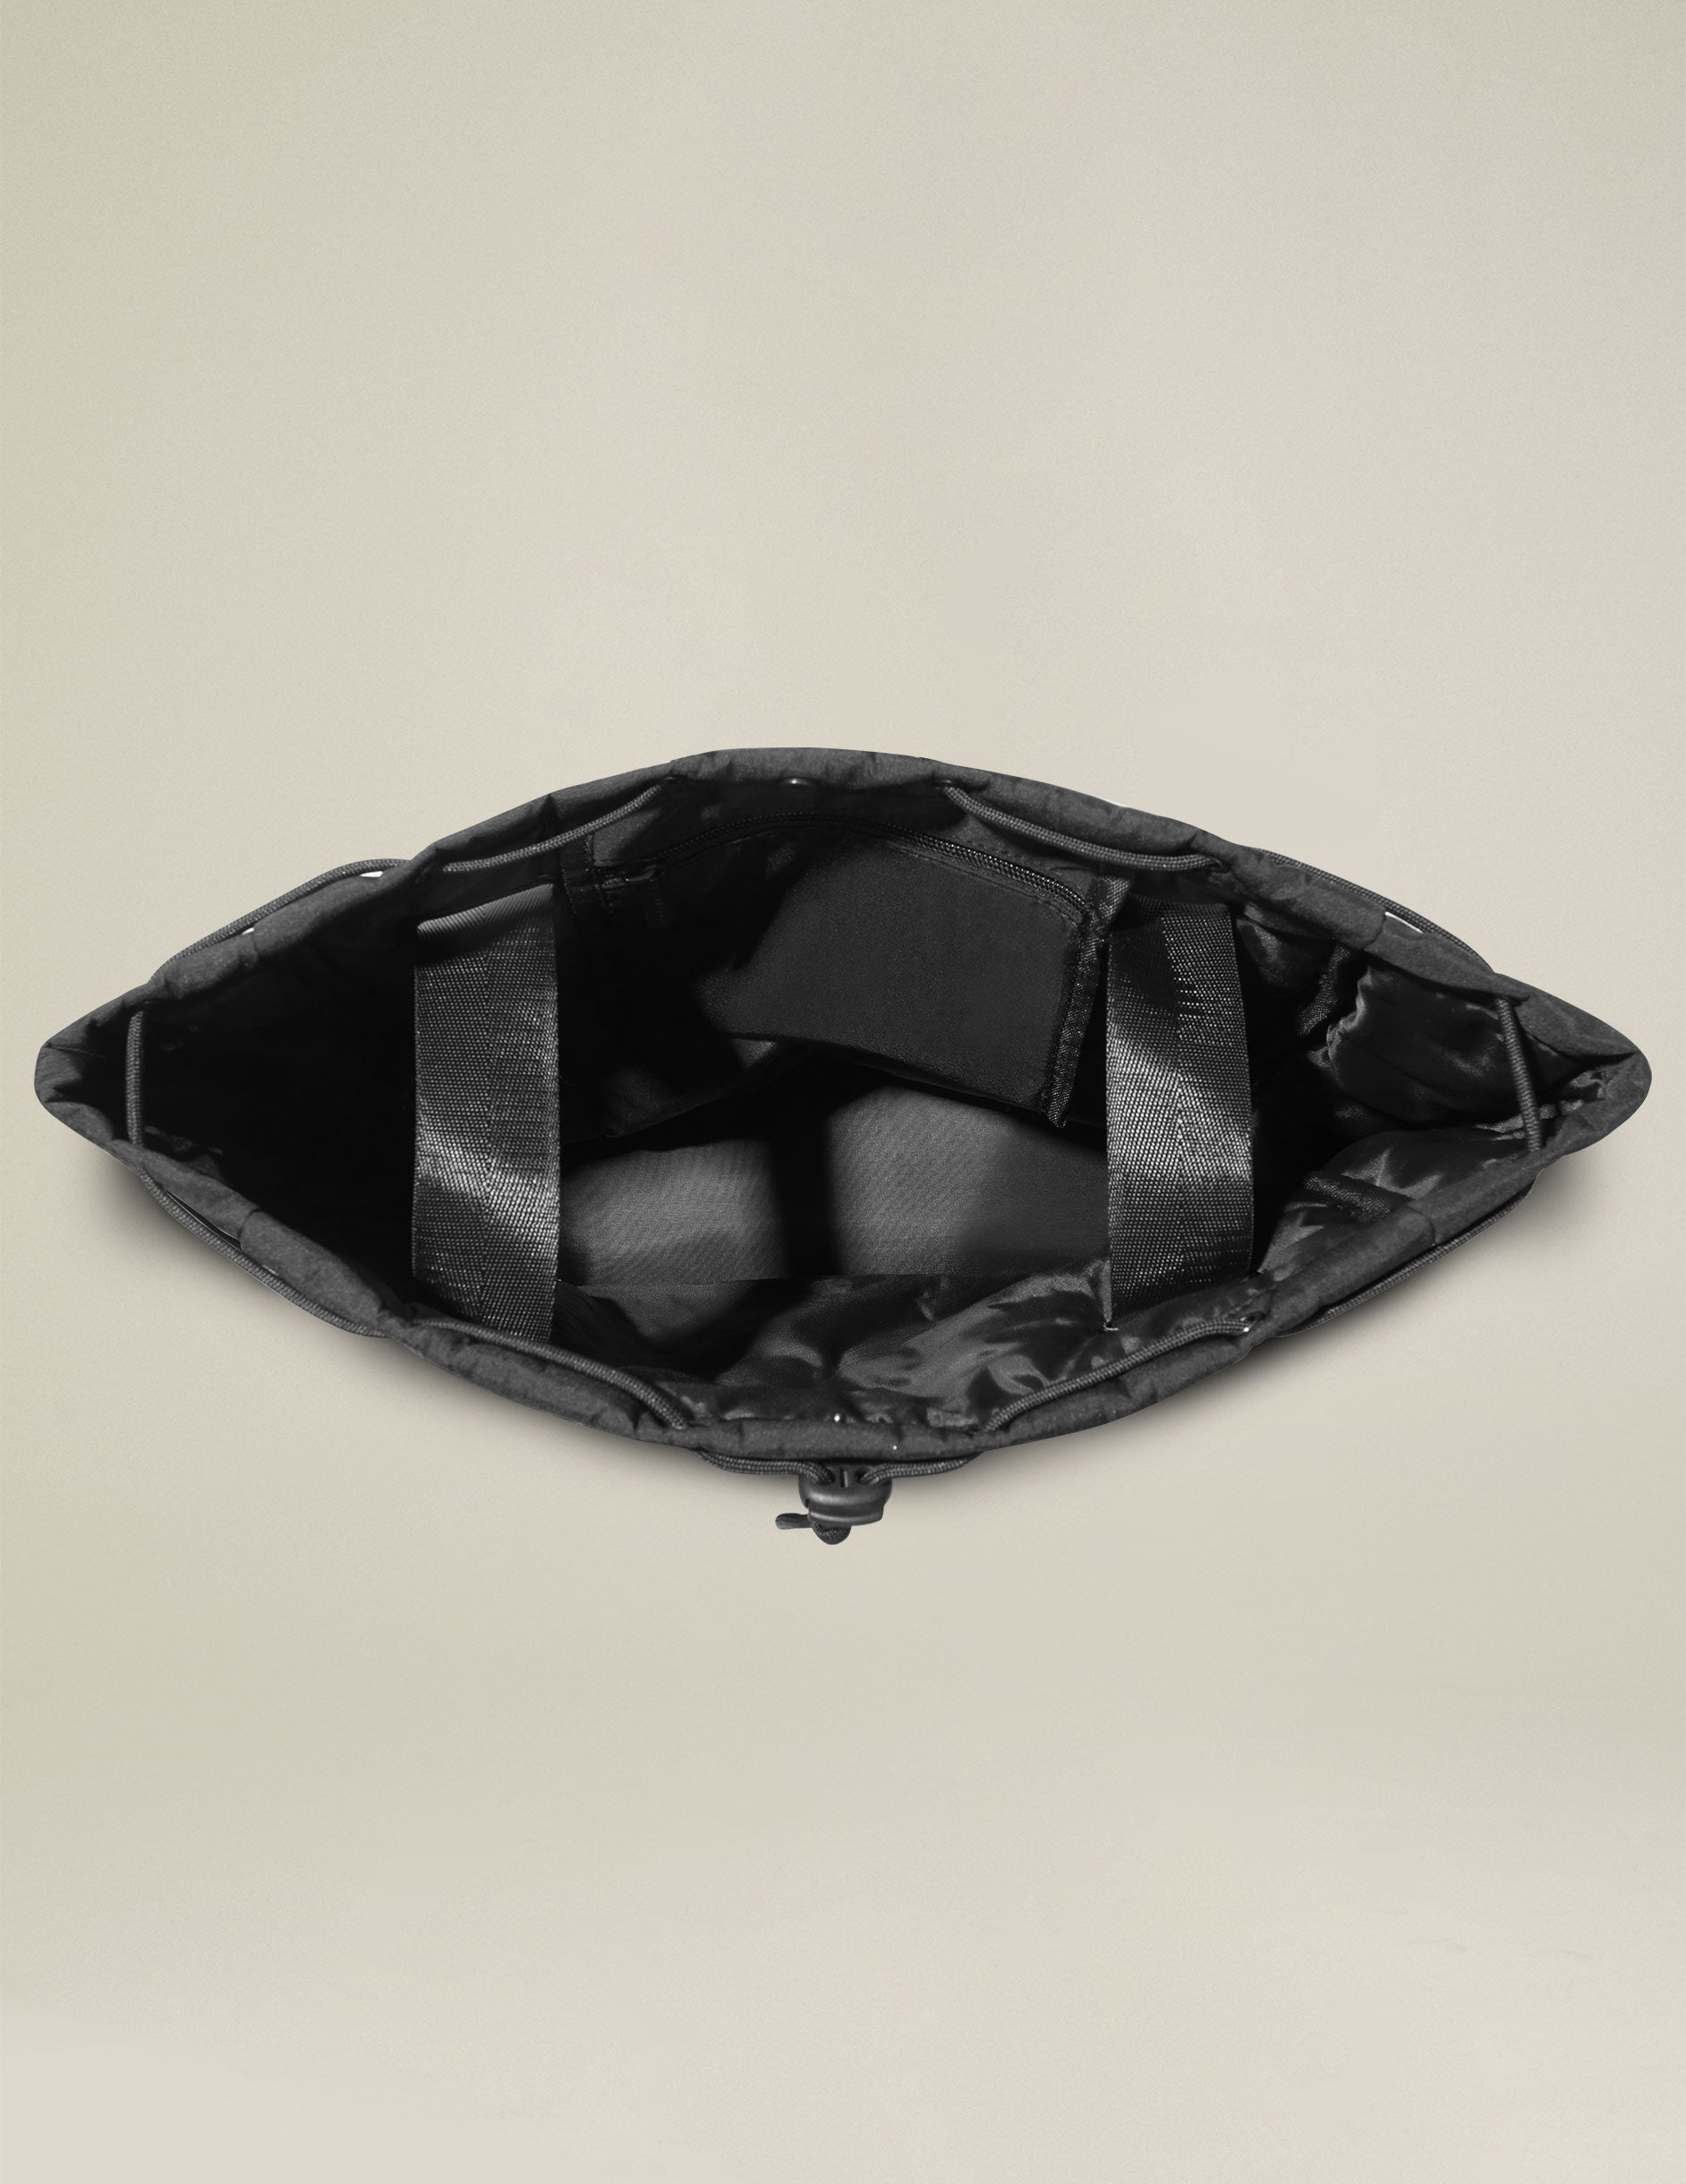 black convertible gym bag.